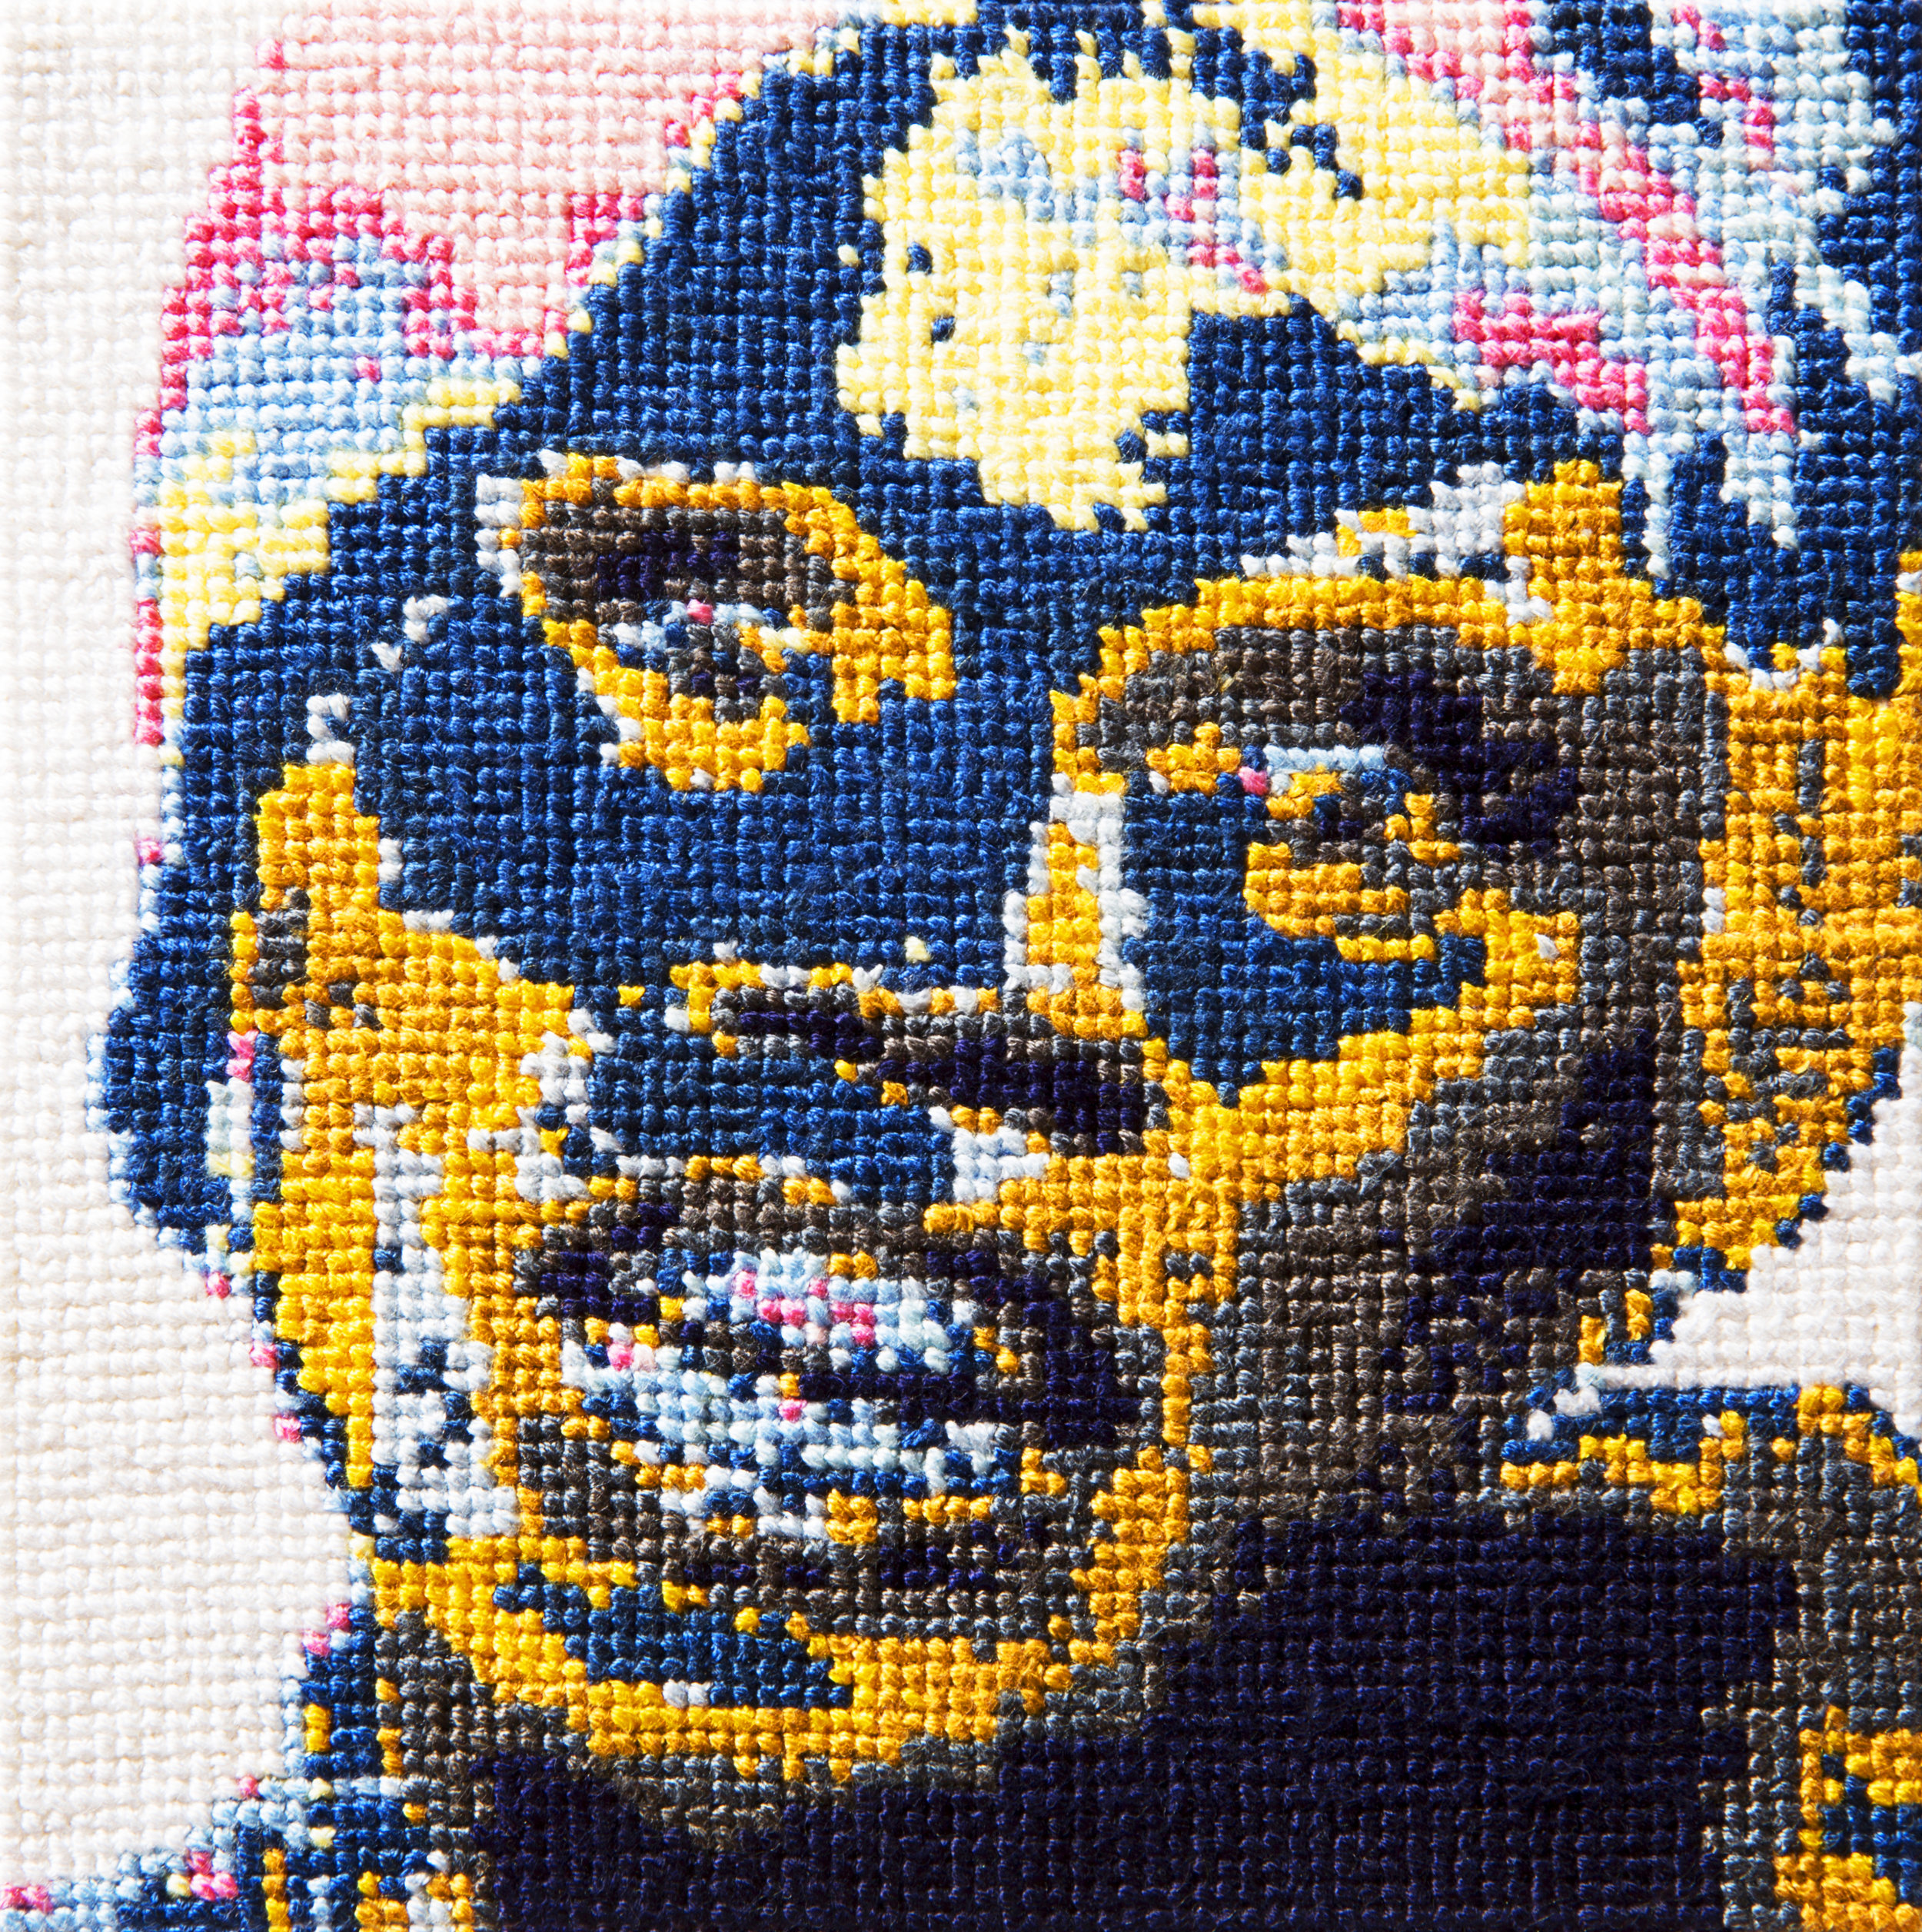   Frame 28   By Amy Salley  5 x 5 inches  Cotton thread on aida cloth  2013 